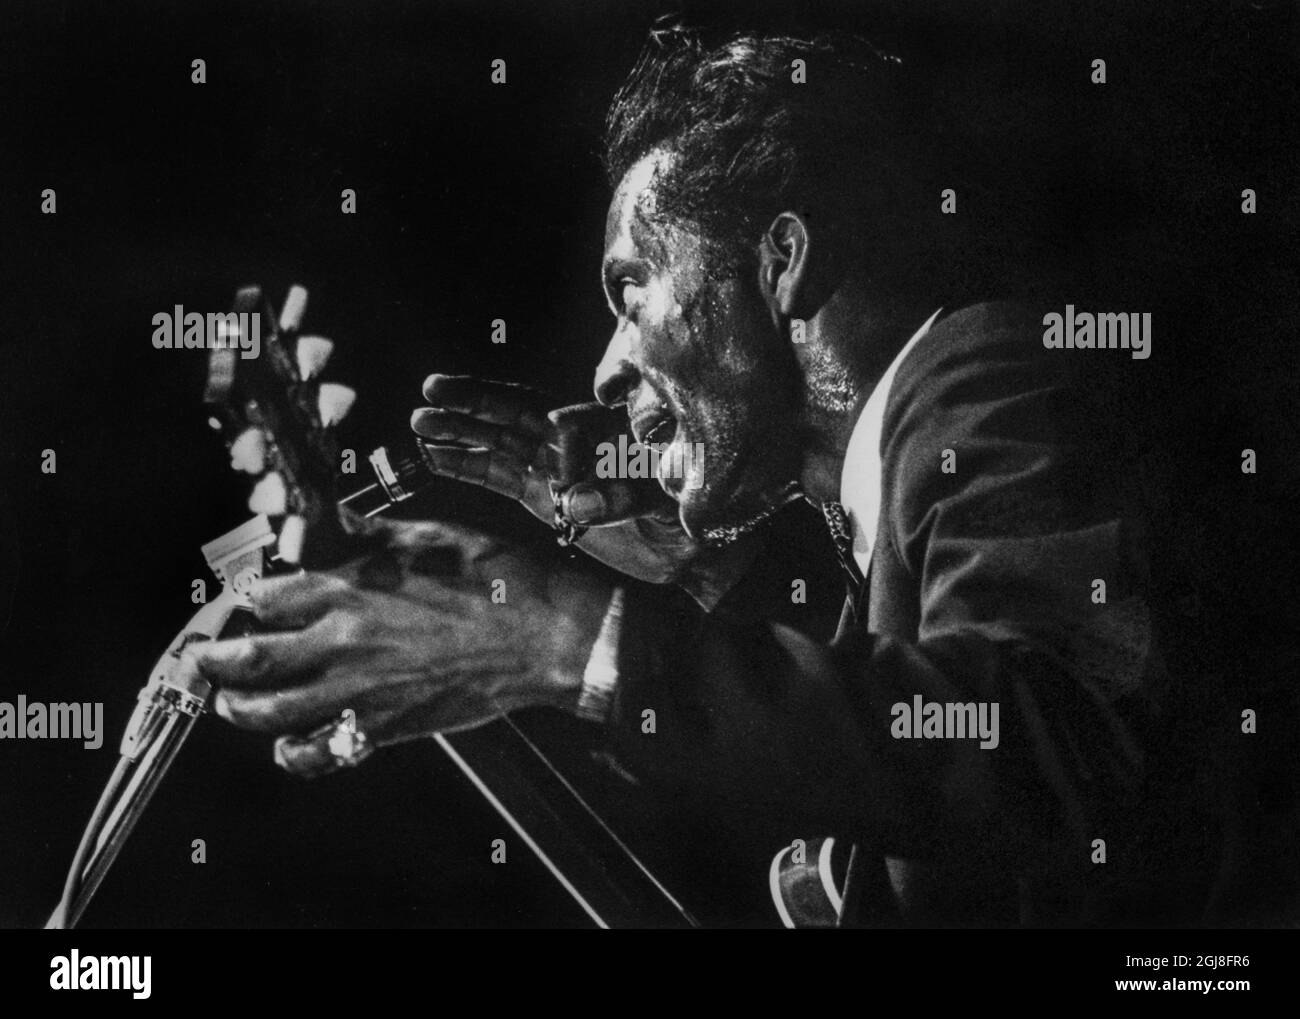 STOCKHOLM 2014-05-08 Datei 11965-10-27 der US-Musiker Chuck Berry erhält den Polar Prize 2014, der am 8. Mai 2014 in Stockholm, Schweden, bekannt gegeben wurde. Originalunterschrift; Chuck Berry spielt eine in Stockholm, Schweden 1965-10-27 Foto: Peter Nordahl / SVD / TT / Kod: 11014 Stockfoto